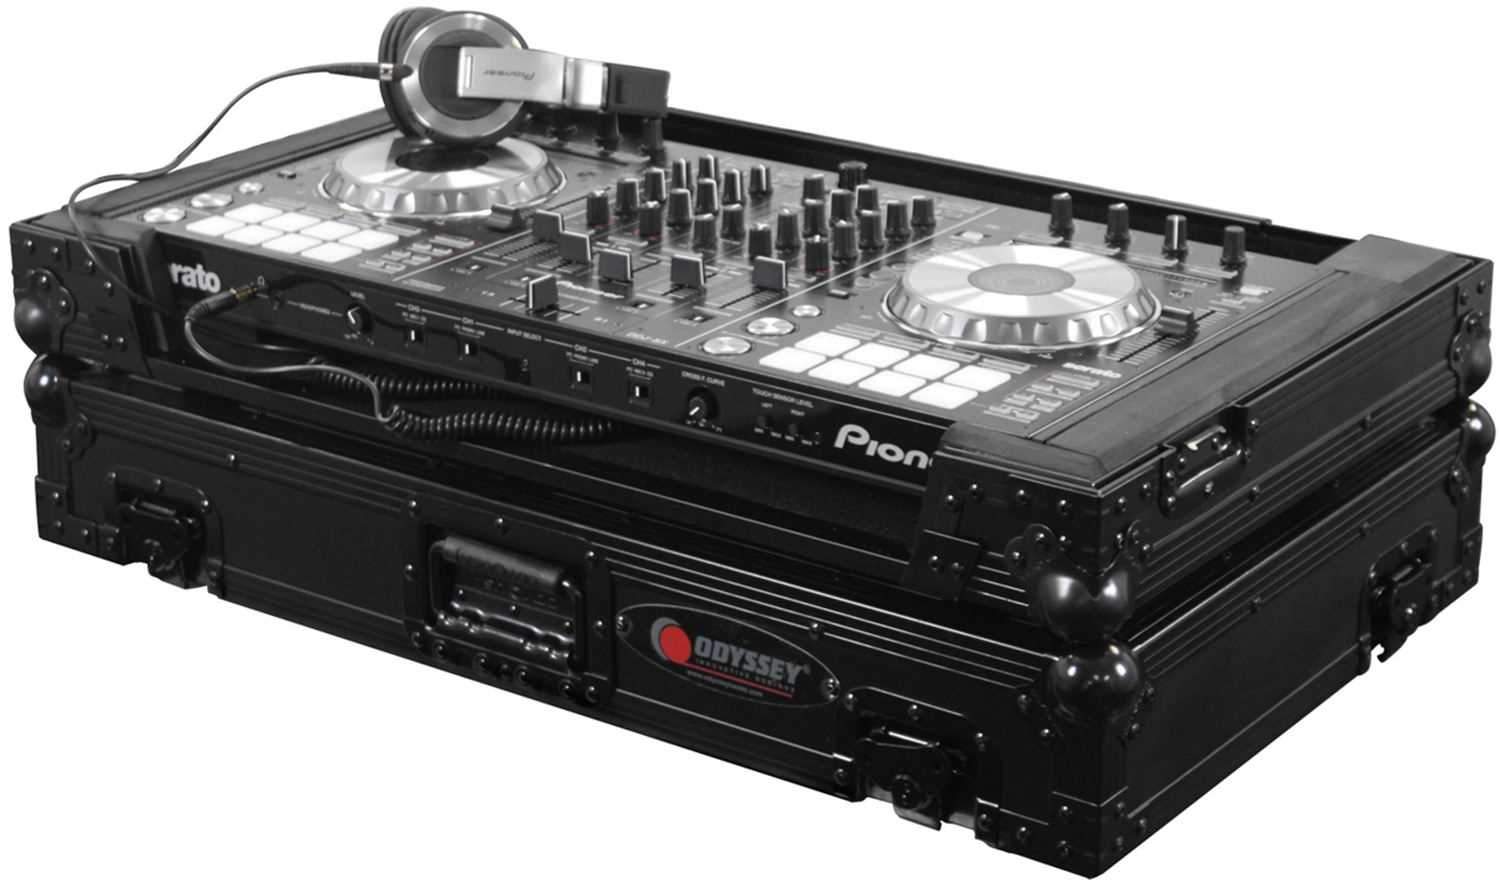 Odyssey FZPIDDJSXBL Black Label Case for Pioneer DDJ-SX3 DJ Controller - ProSound and Stage Lighting